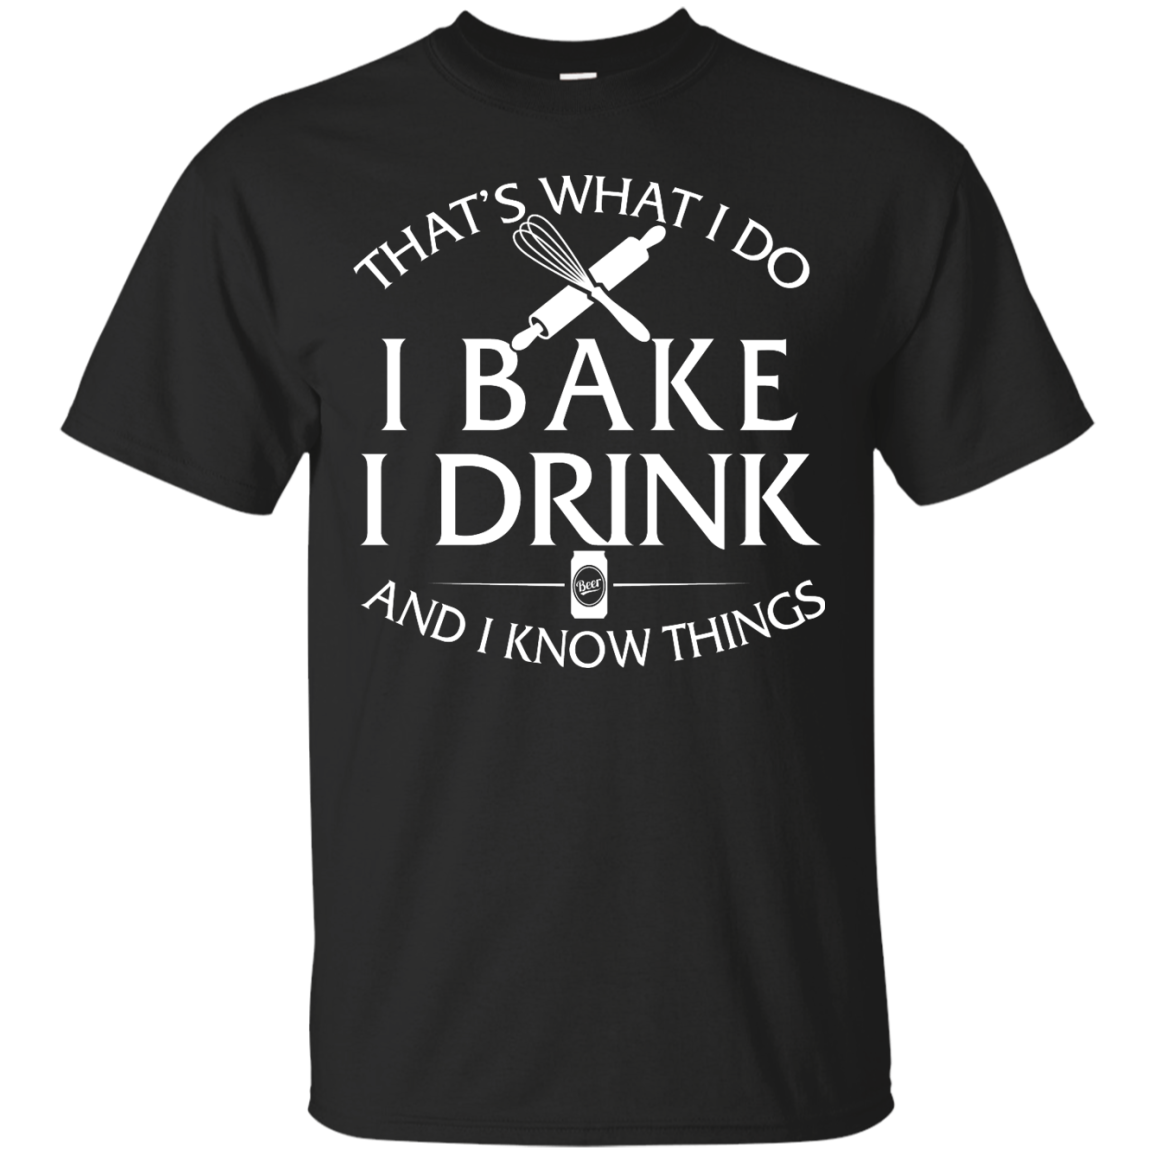 Bake T-Shirt: What I Do I Bake I Drink and I Know Things Shirt